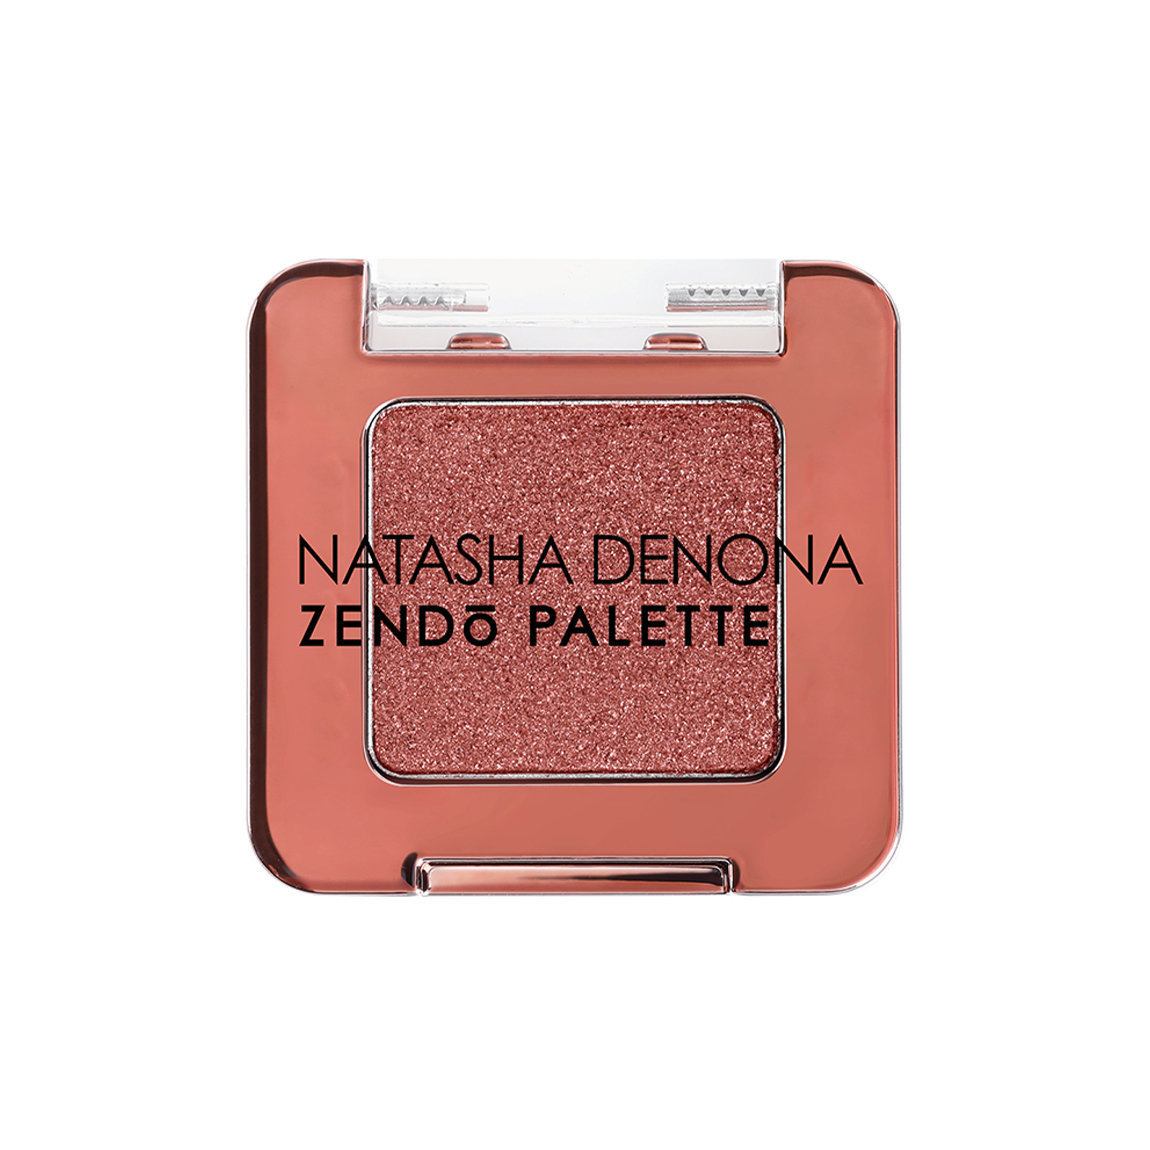 Free mini Single Shadow with qualifying Natasha Denona purchase